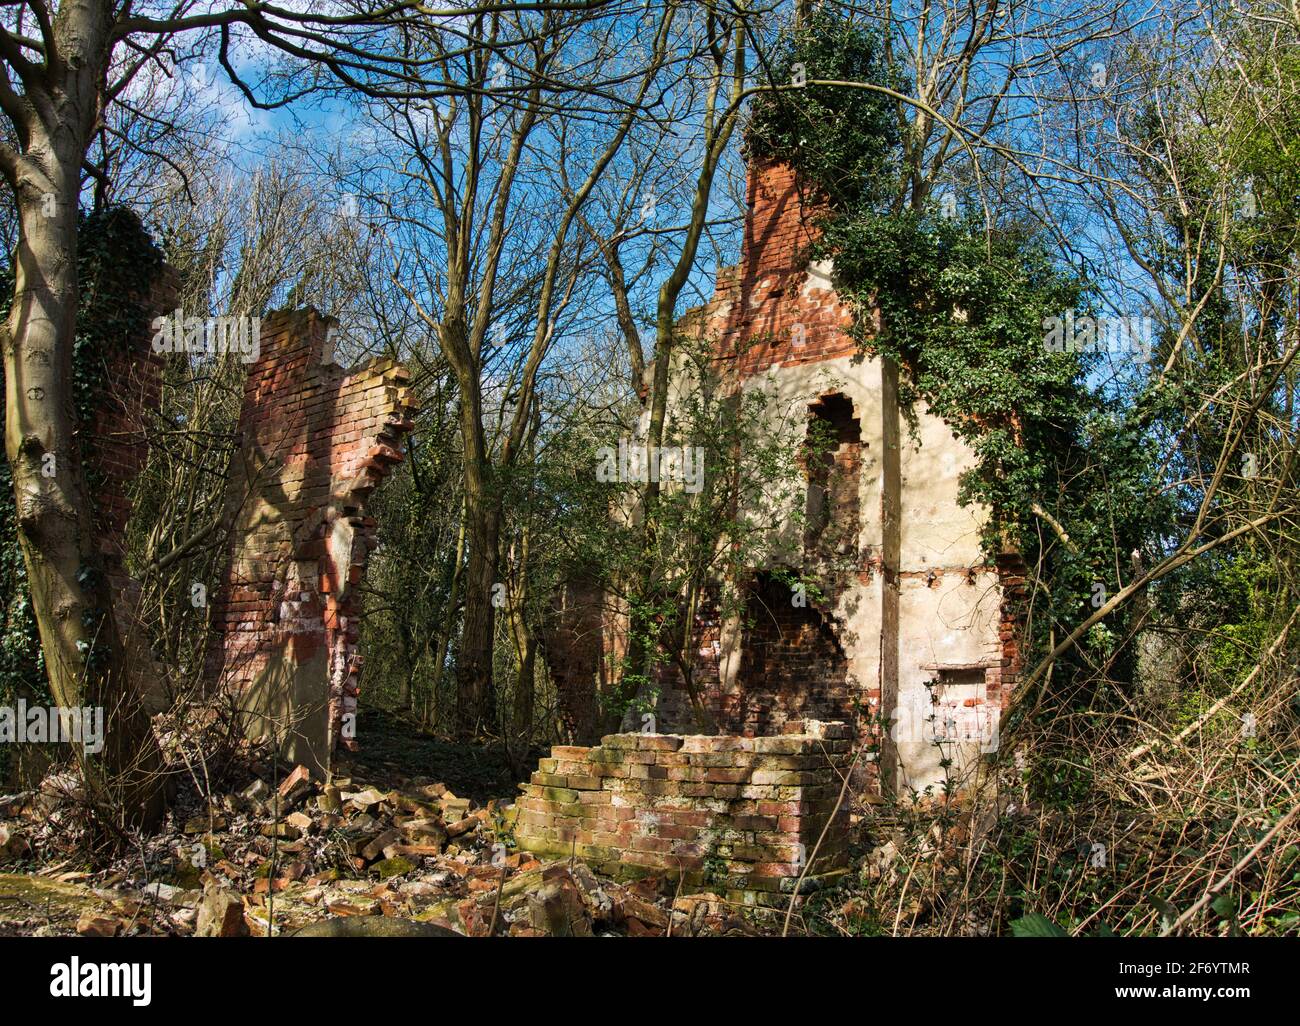 Le rovine crumbling di Norris Hill Cottages nella foresta nazionale vicino Moira North West Leicestershire. Foto Stock